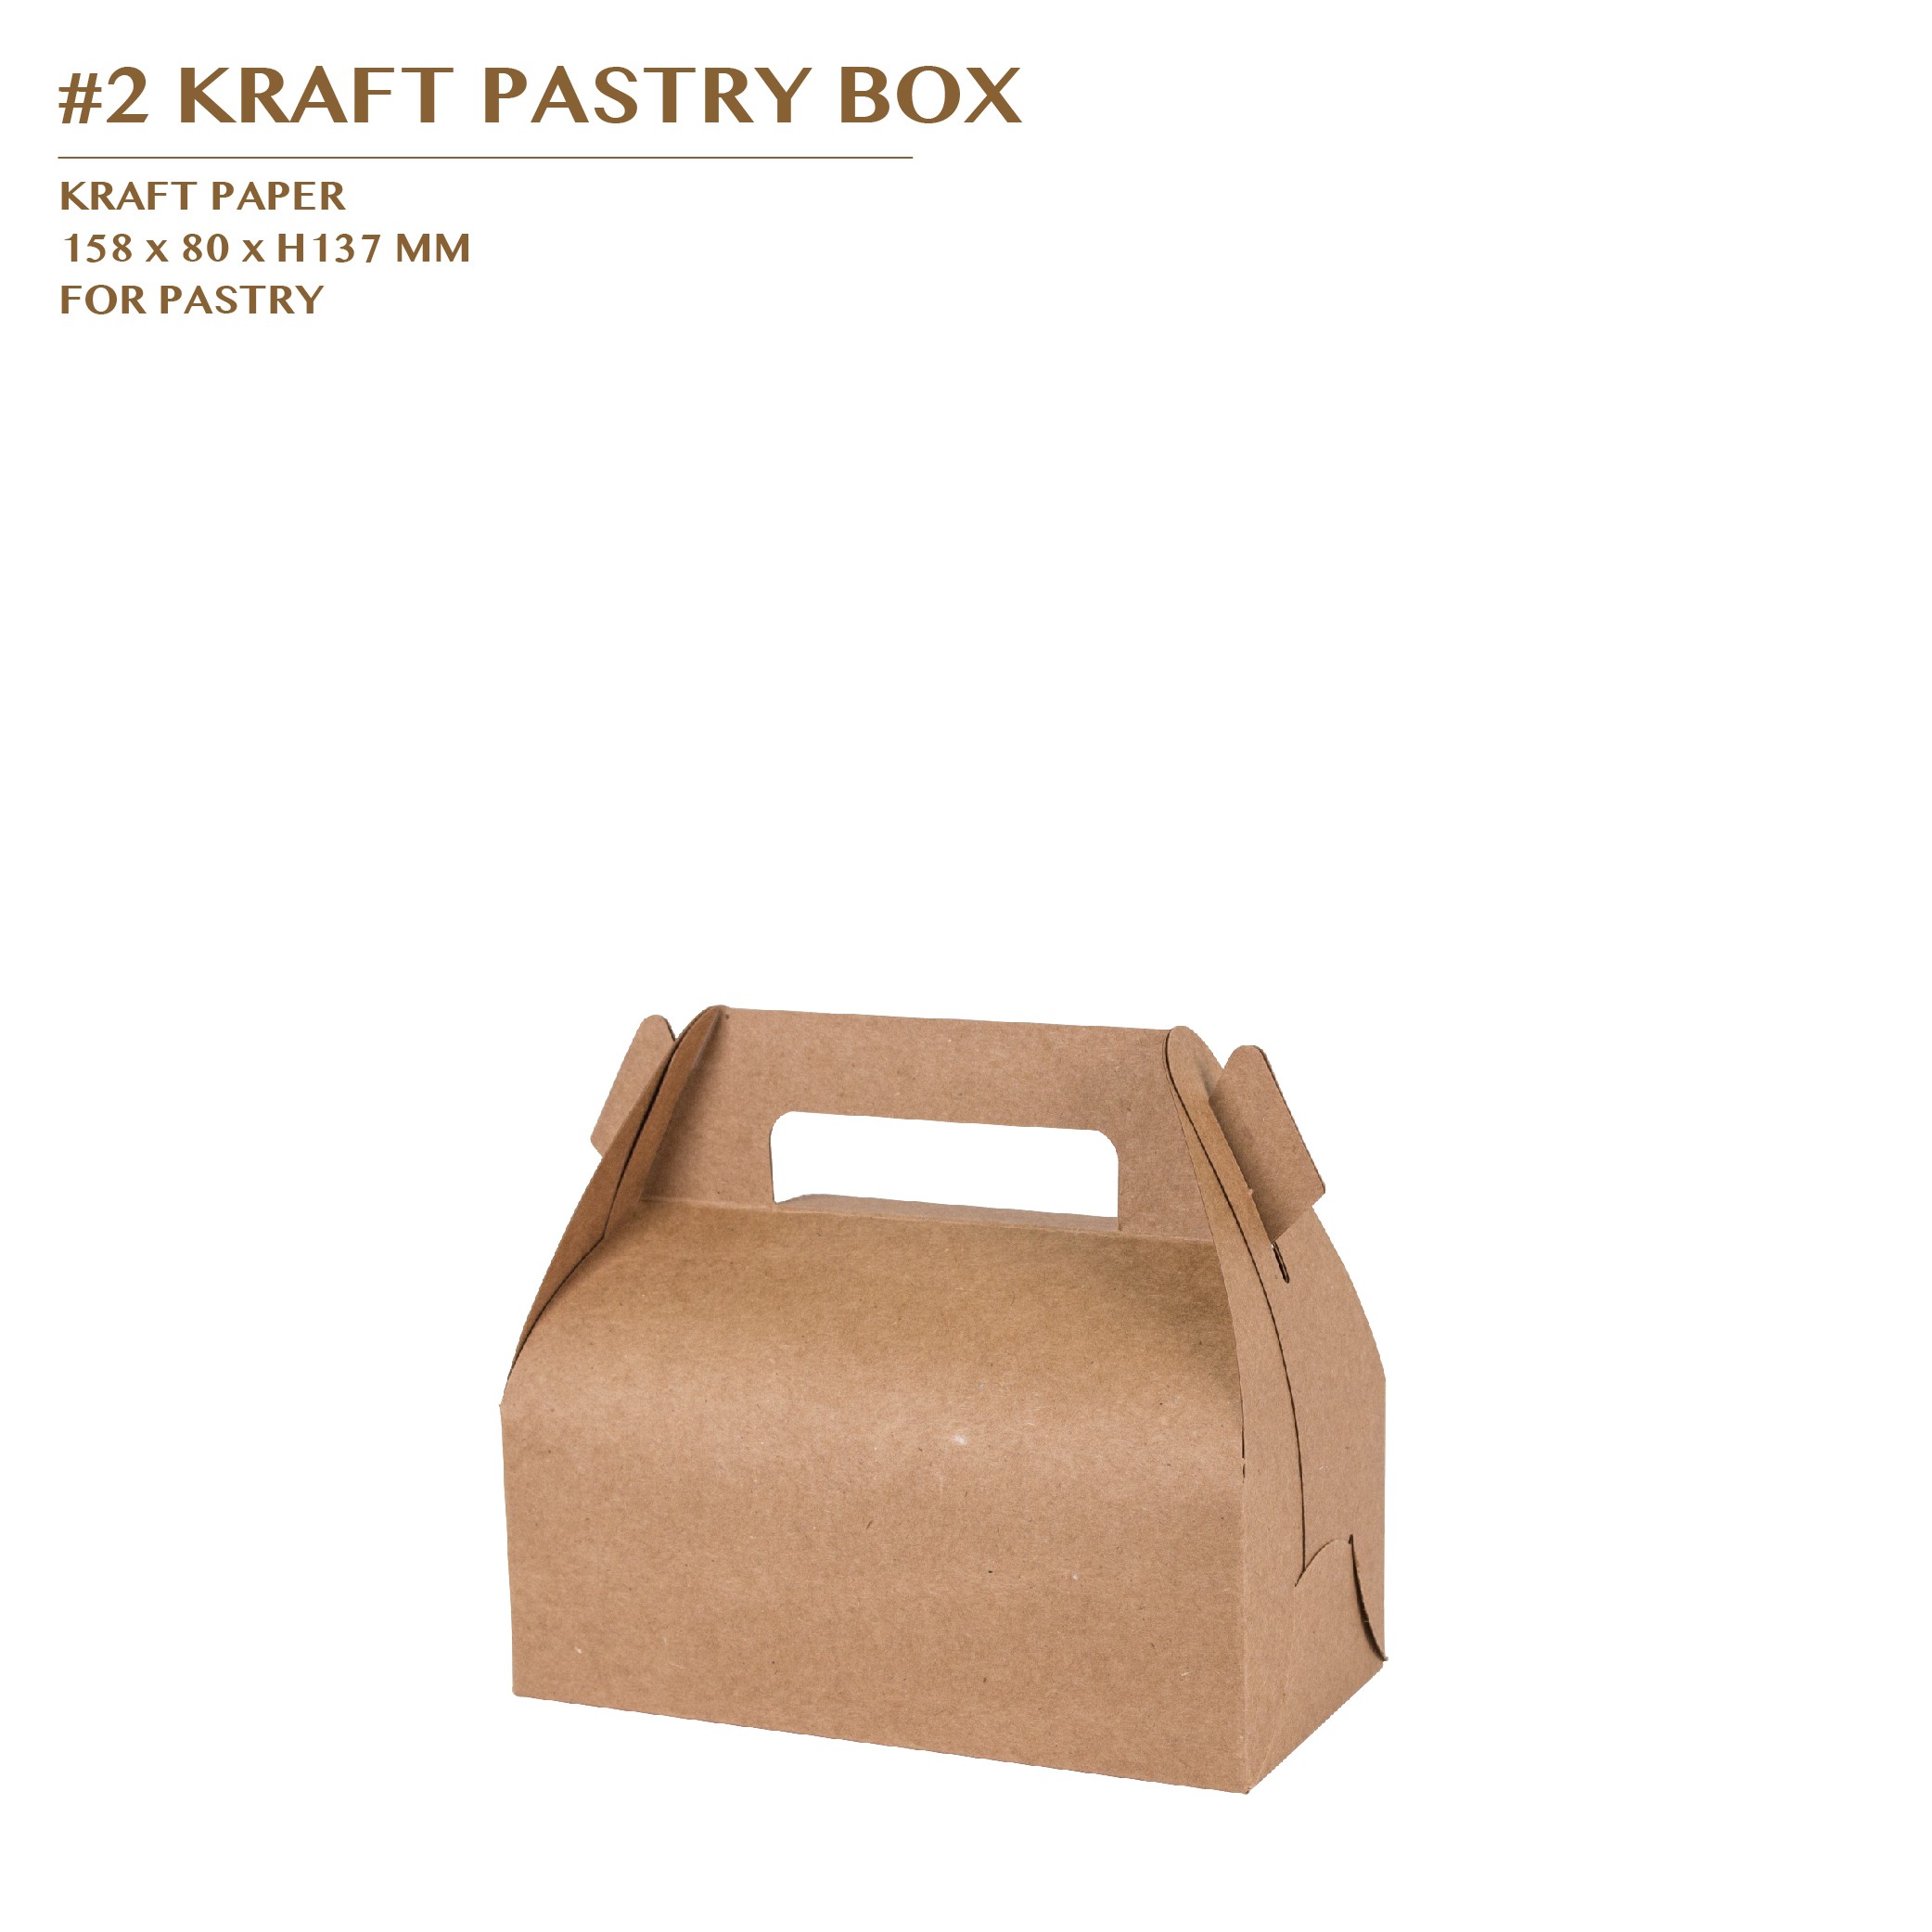 PRE-ORDER #2 KRAFT PASTRY BOX